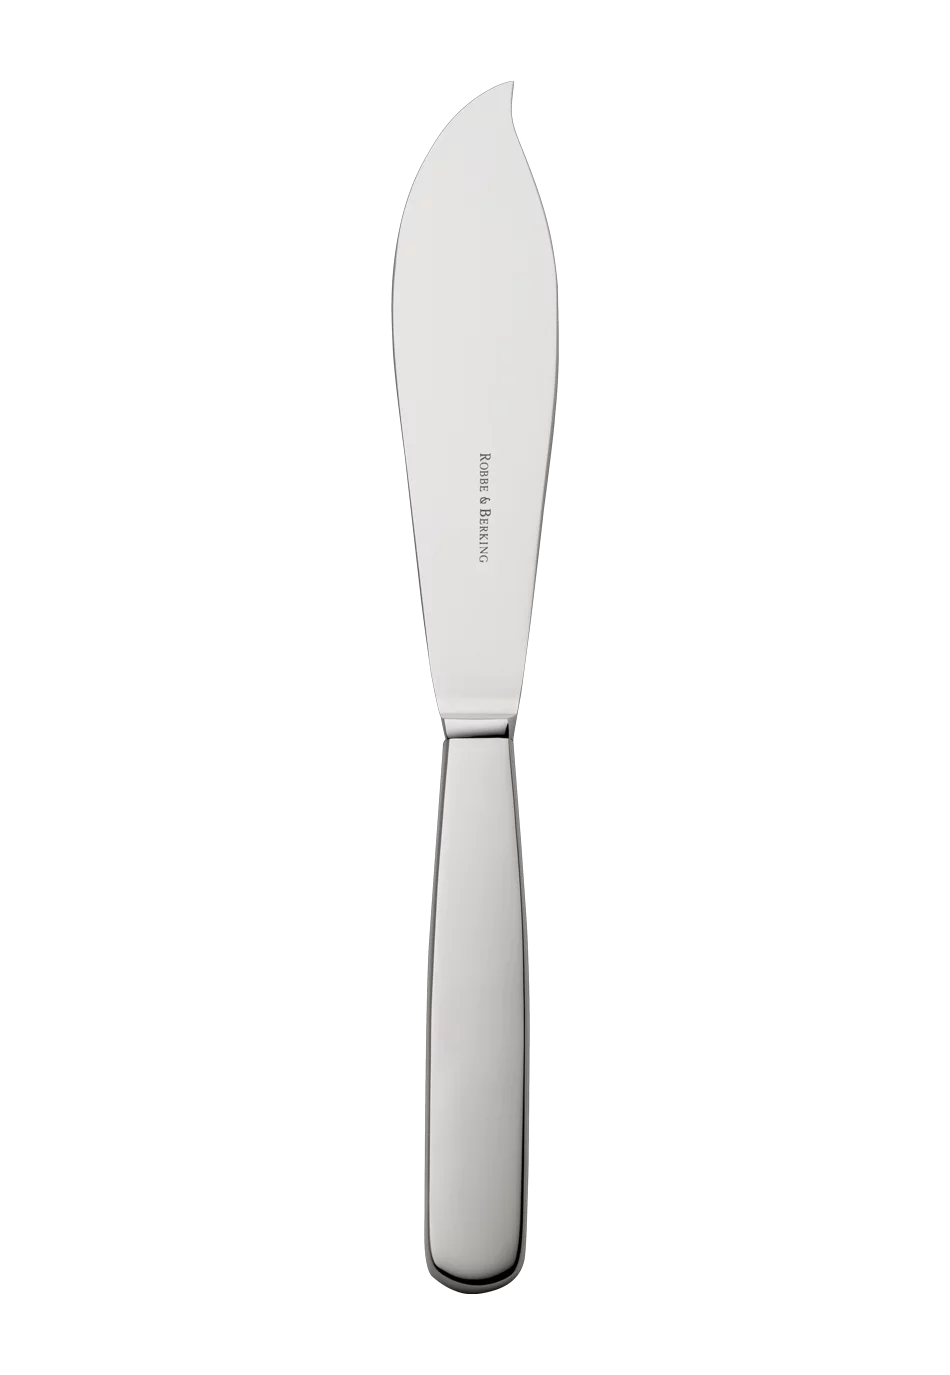 Topos Tart Knife (18/8 stainless steel)